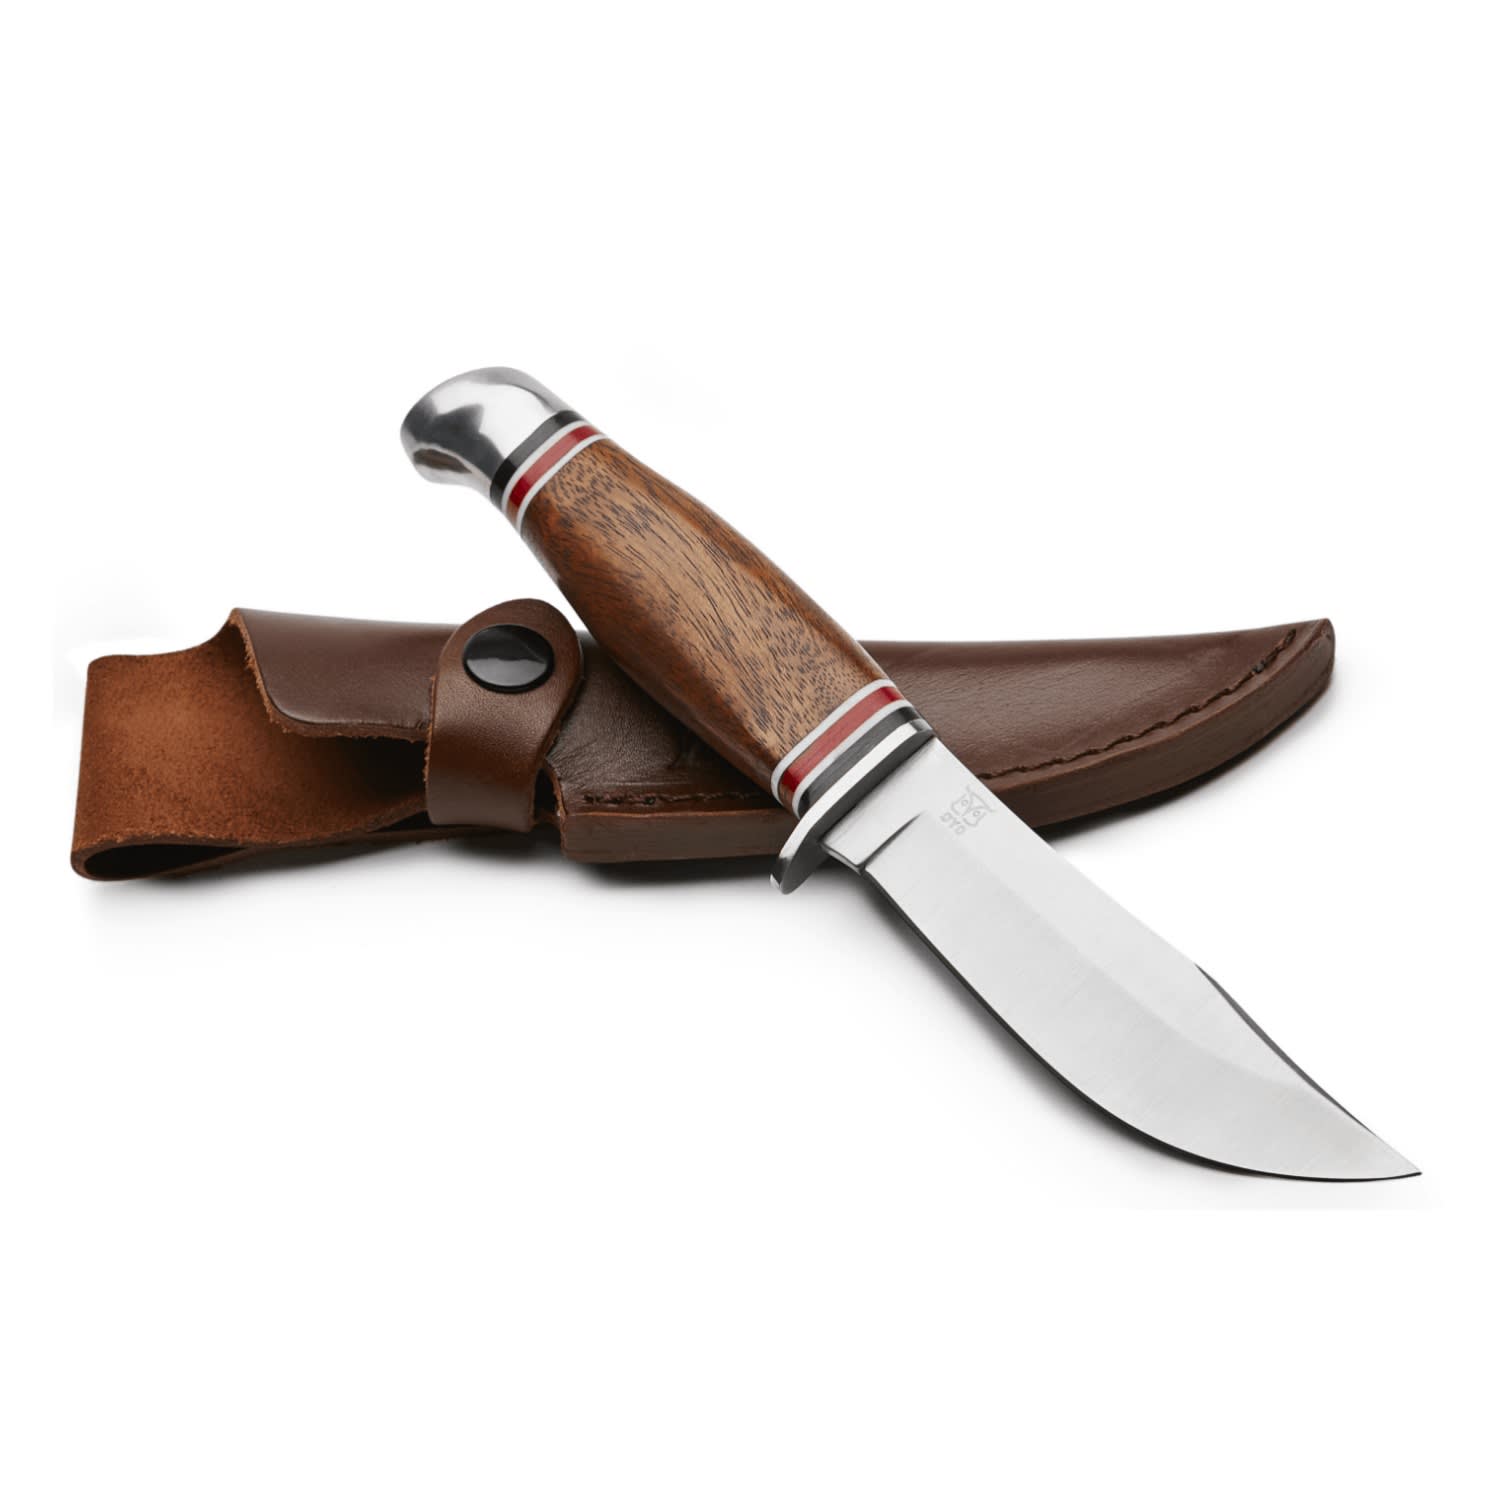 Køb Geilo Knife with Leather Sheath fra